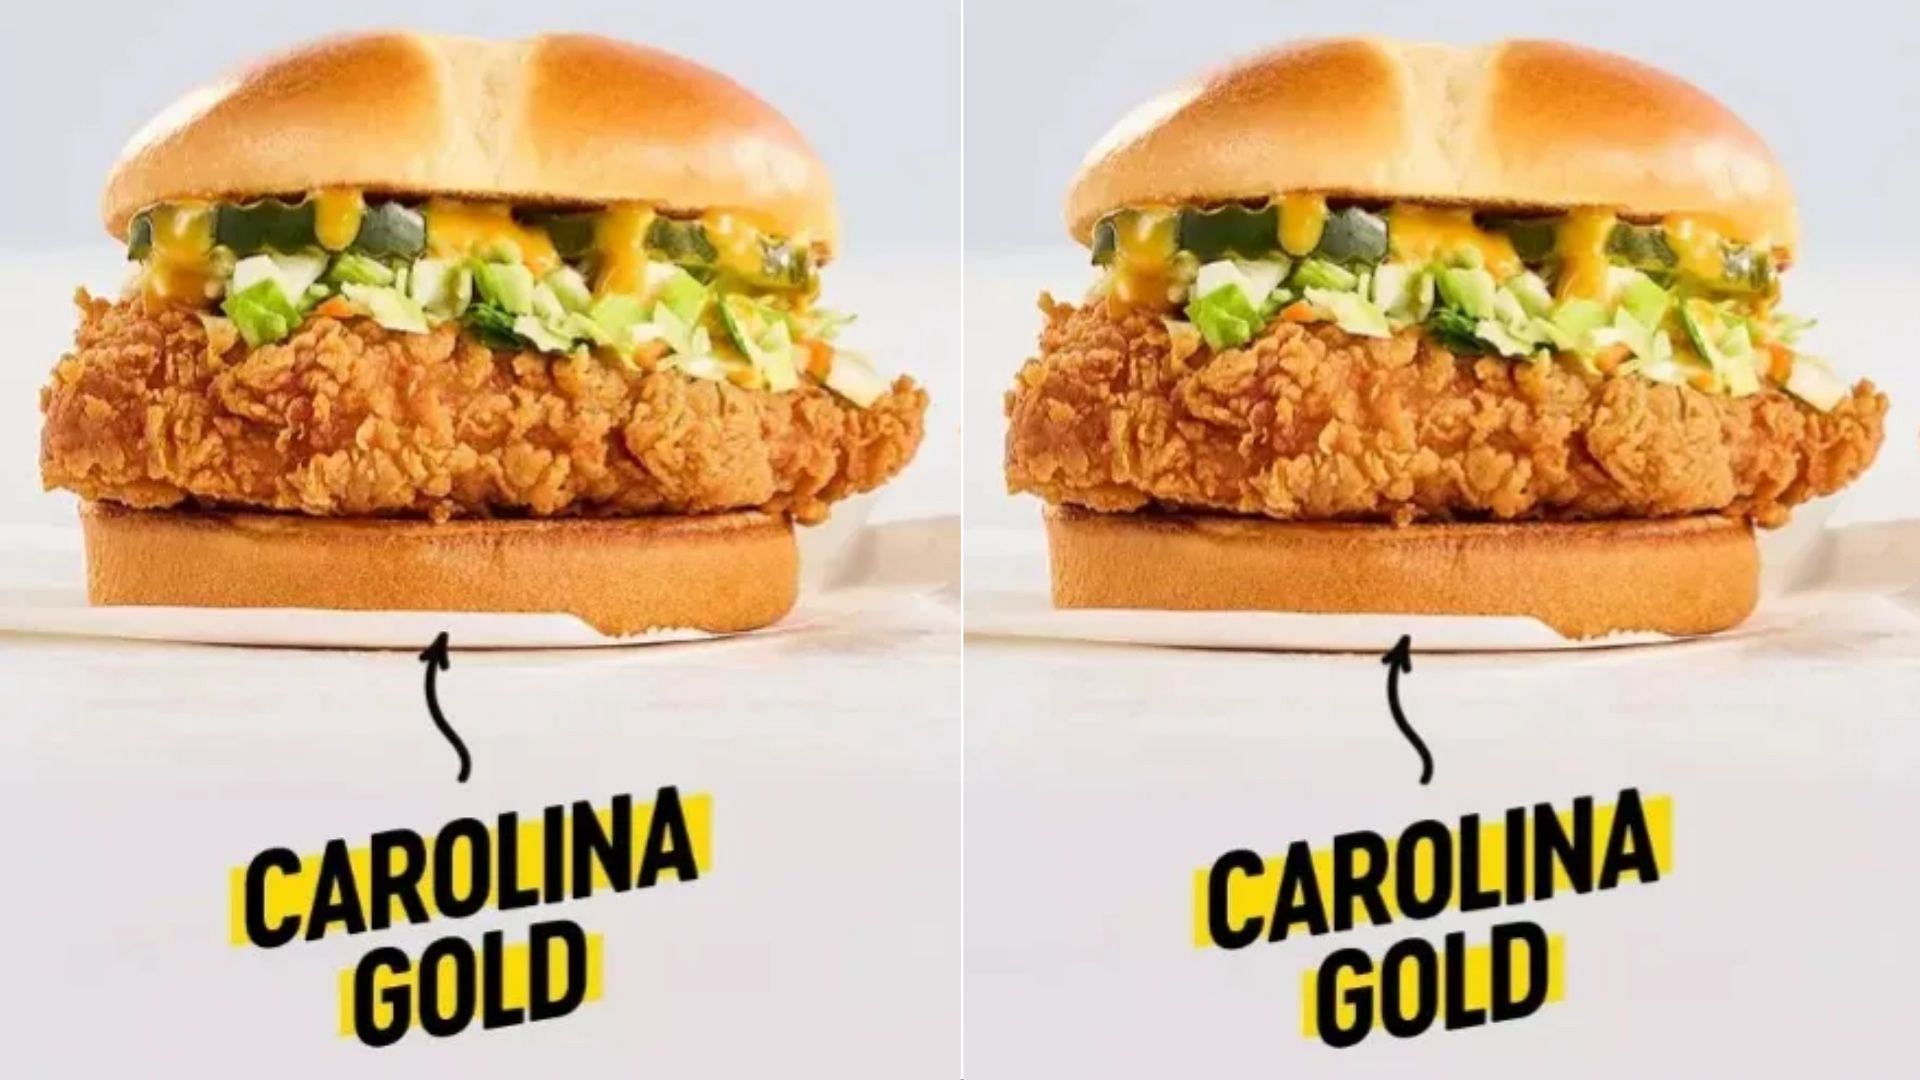 Bo&#039;s Carolina Gold Chicken Sandwich (Image via Bo.)